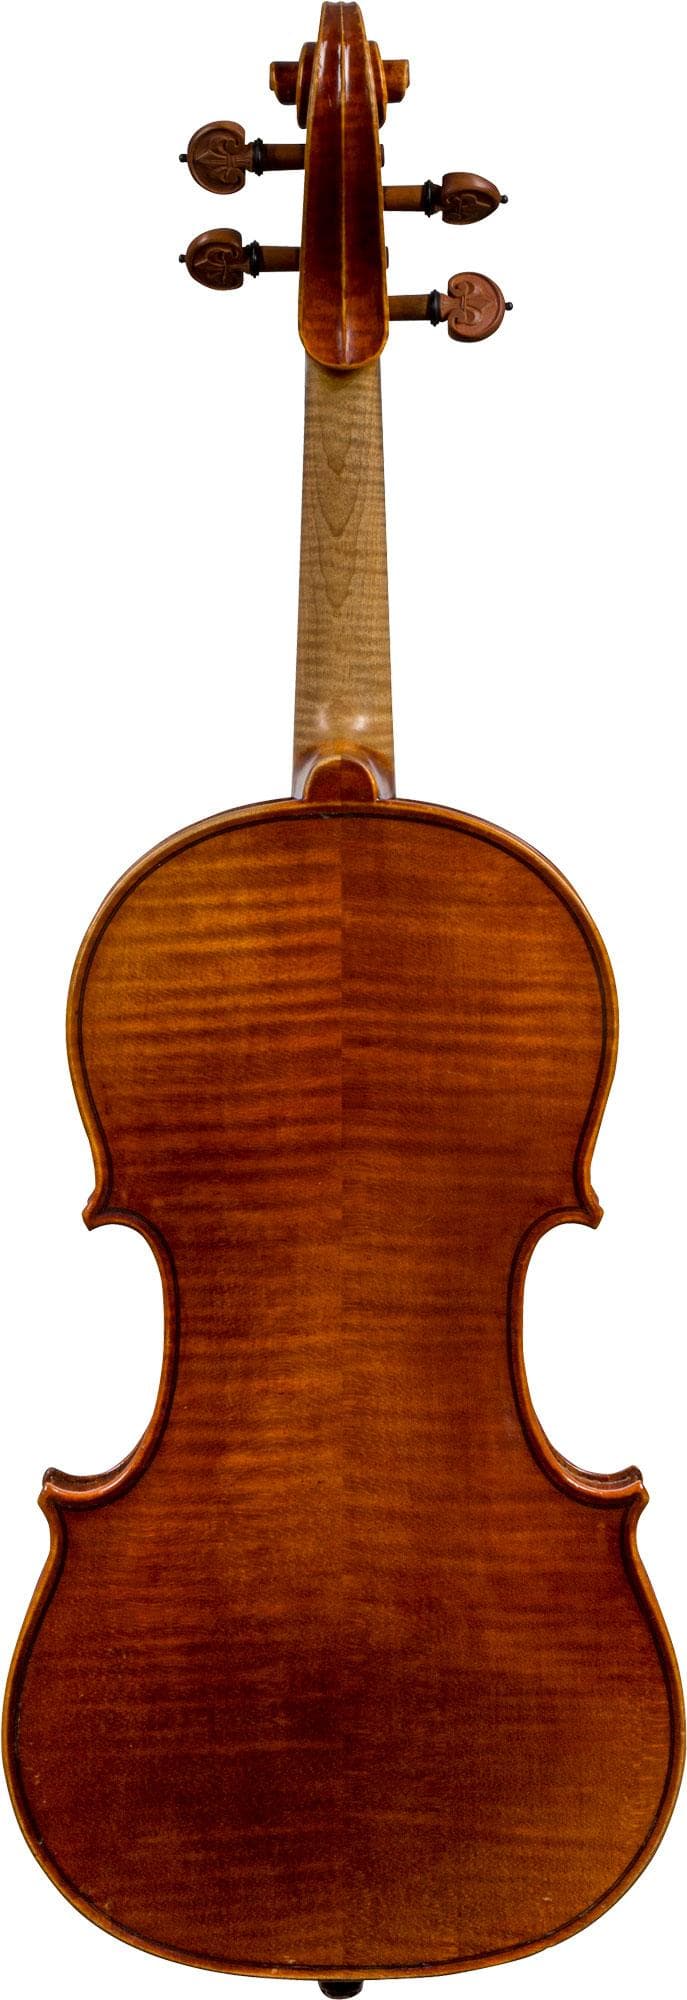 Heinrich Th Heberlein Jr Violin, Germany, 1934